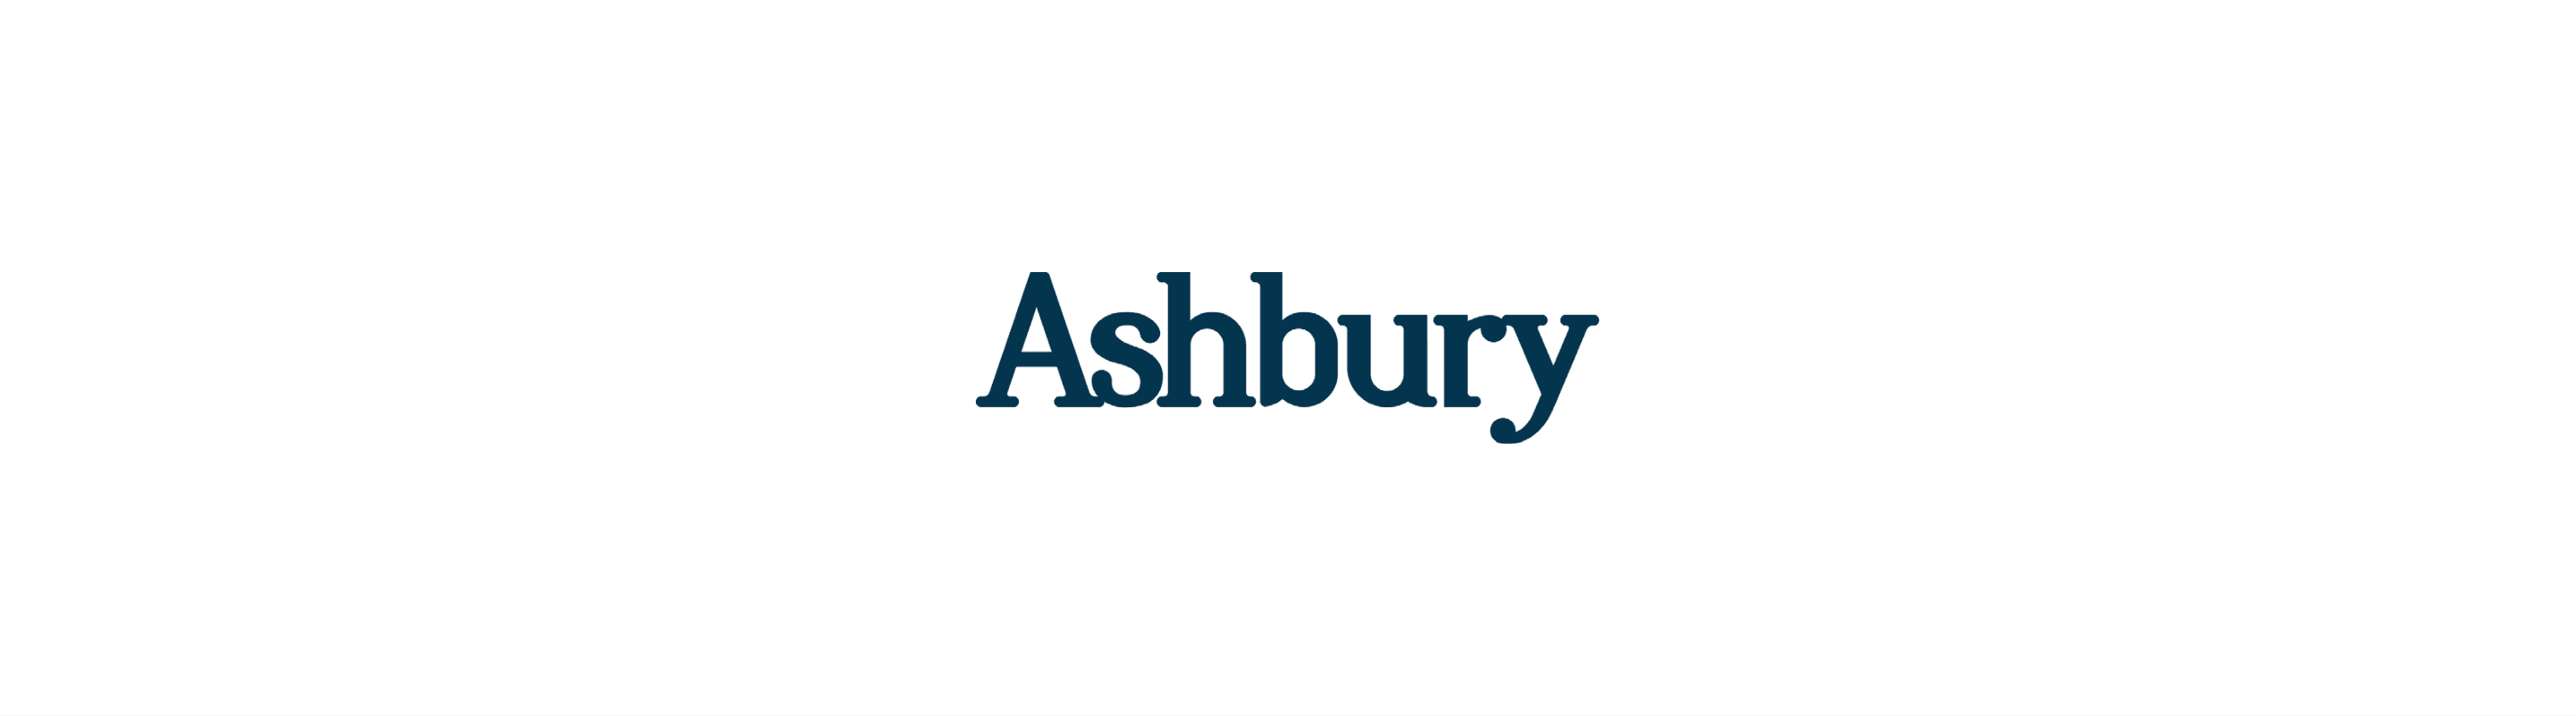 Ashbury banner